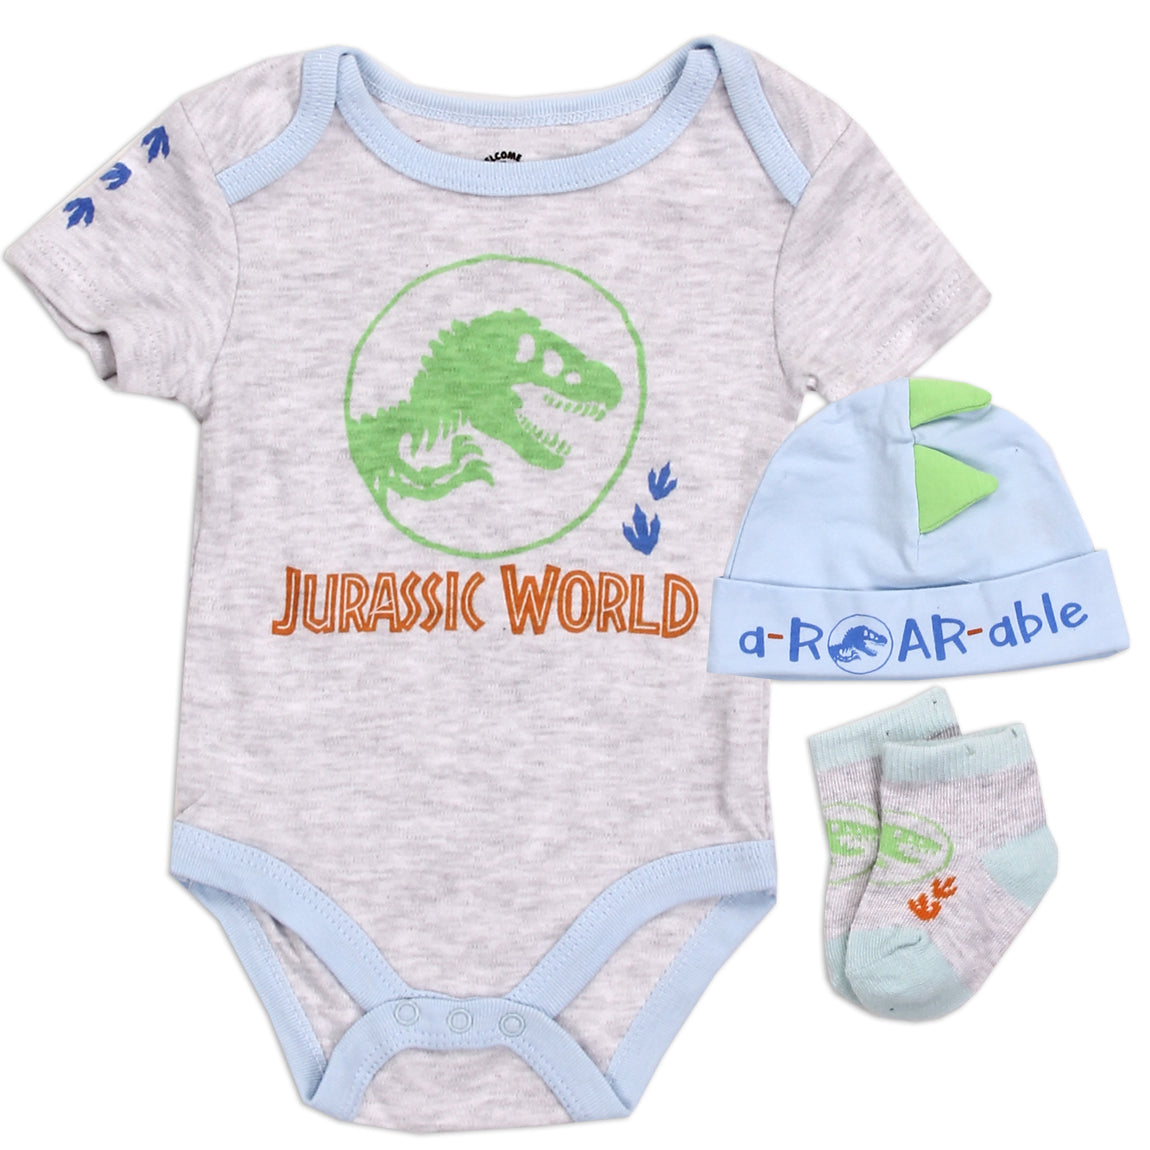 JURASSIC WORLD Boys Newborn 3-Piece Set (Pack of 6)